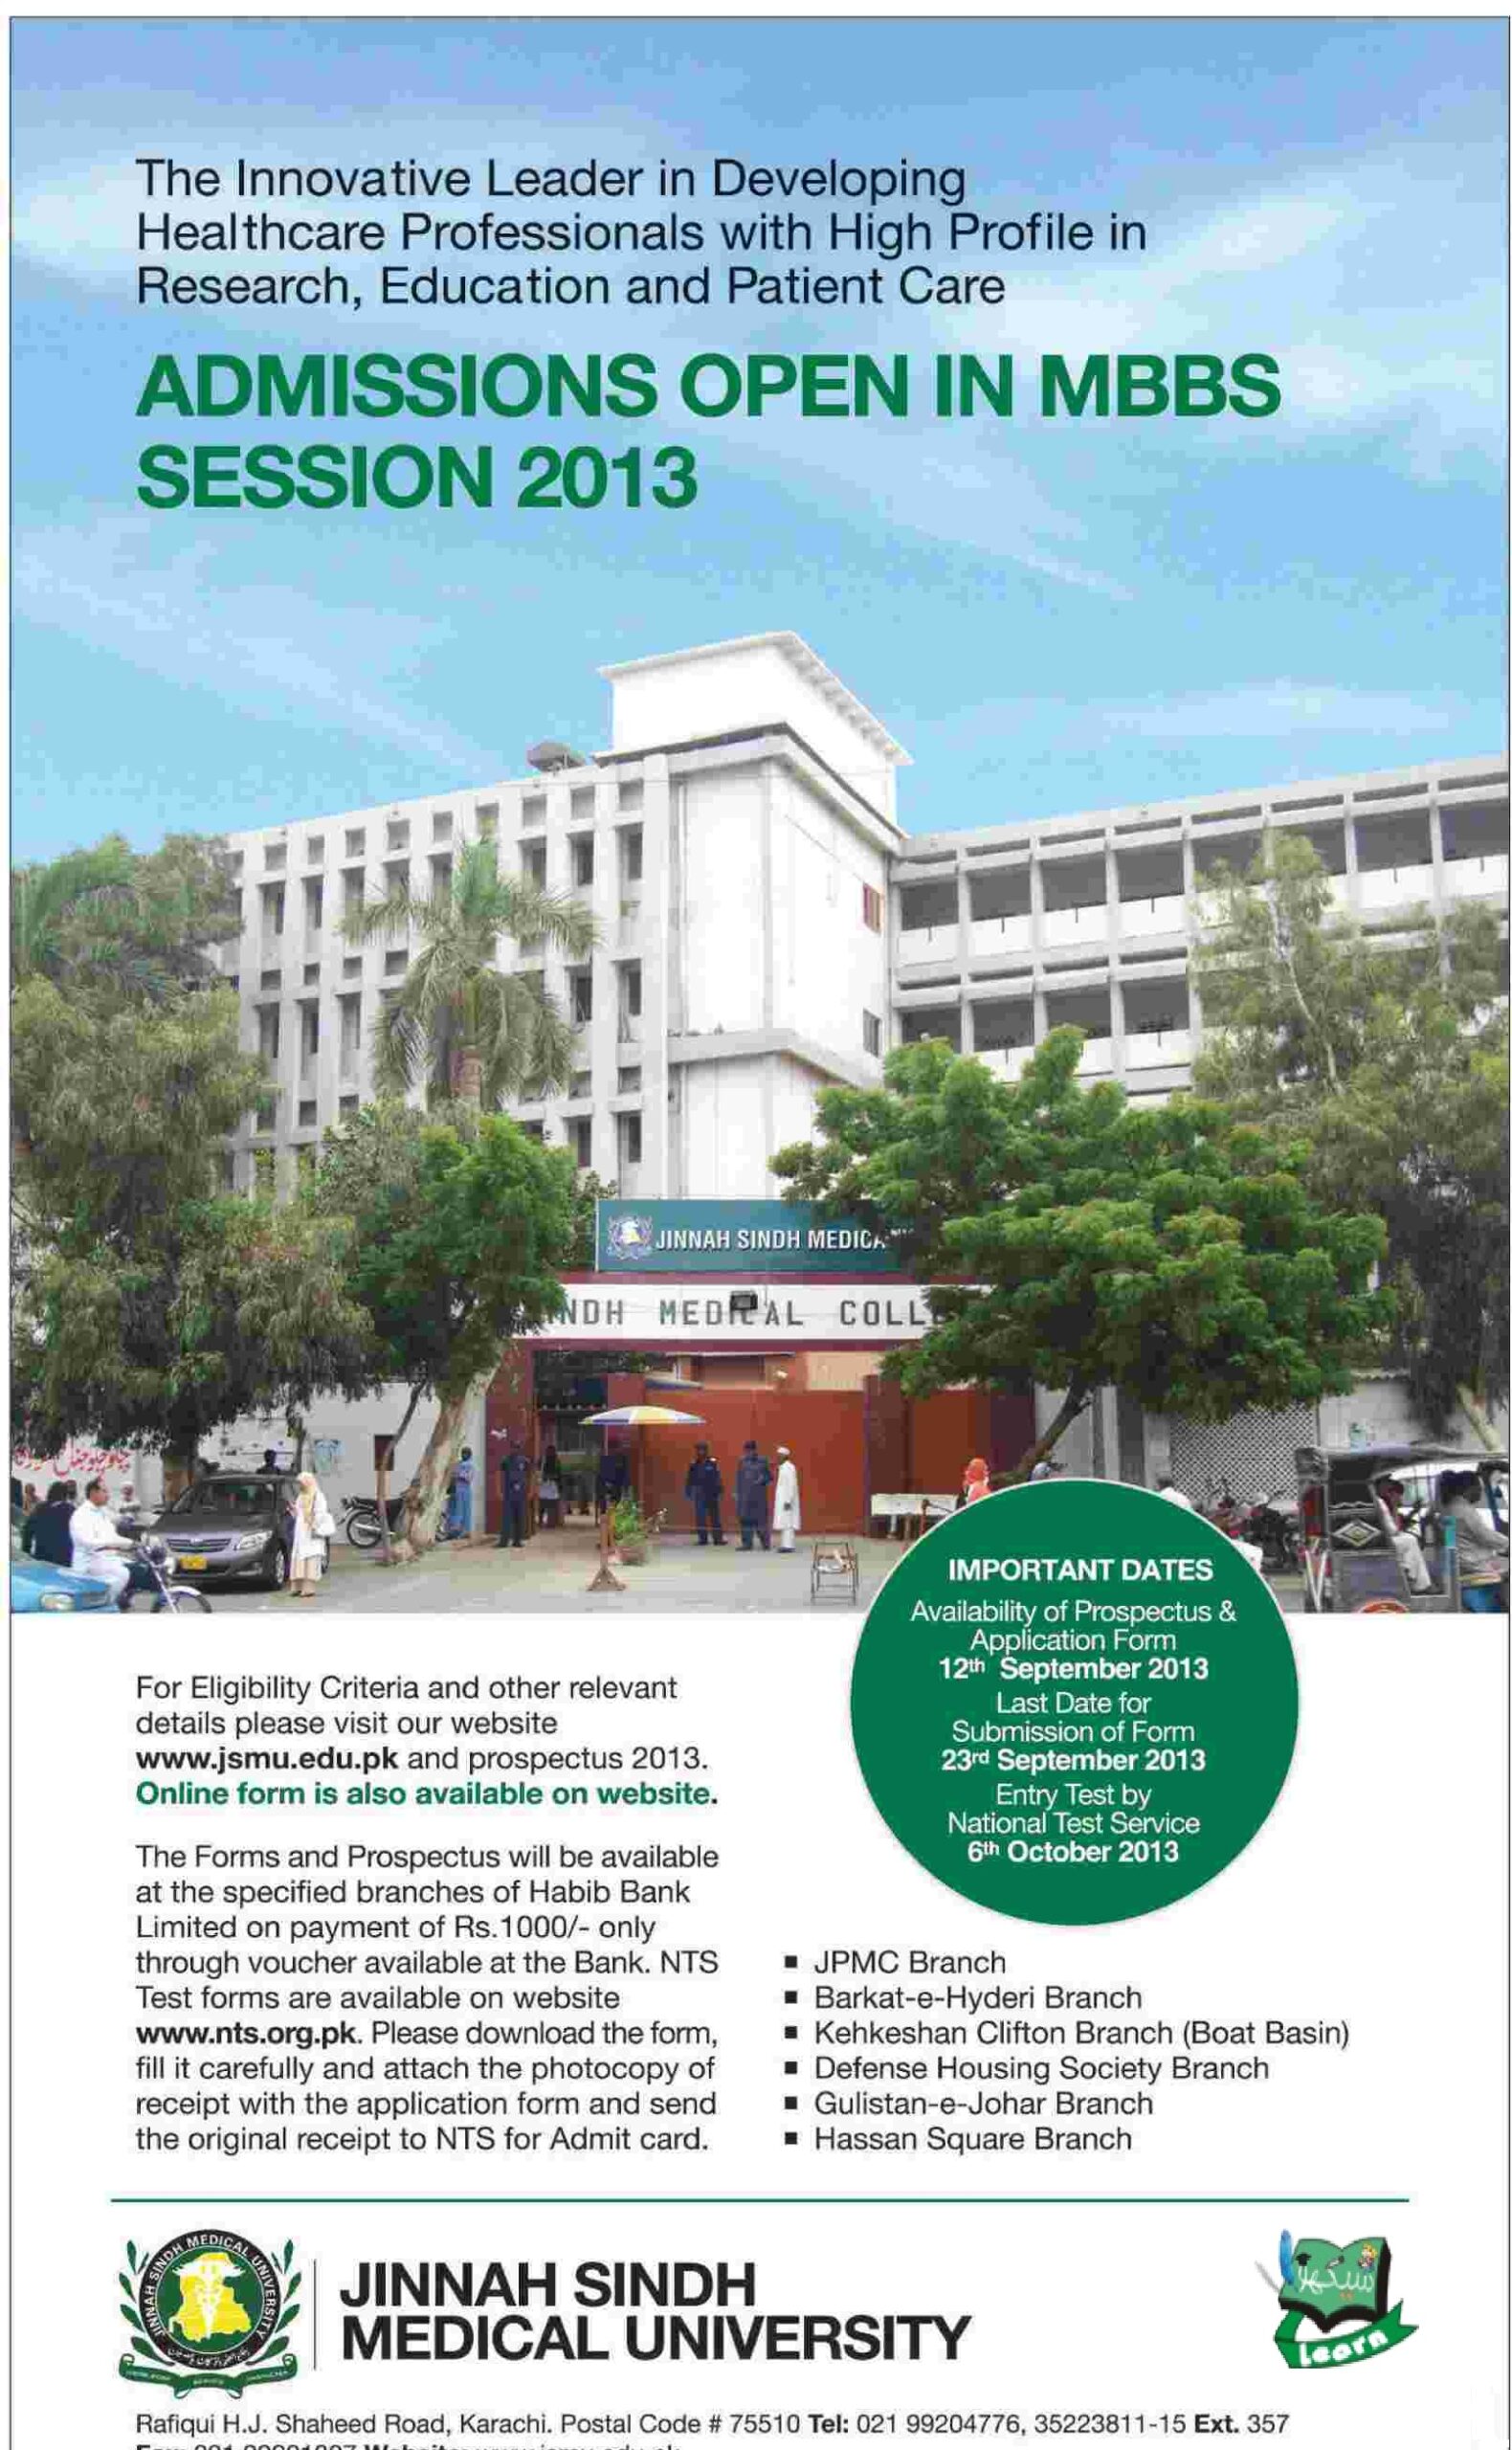 Jinnah Sindh Medical University Karachi Mbbs Admission 2013